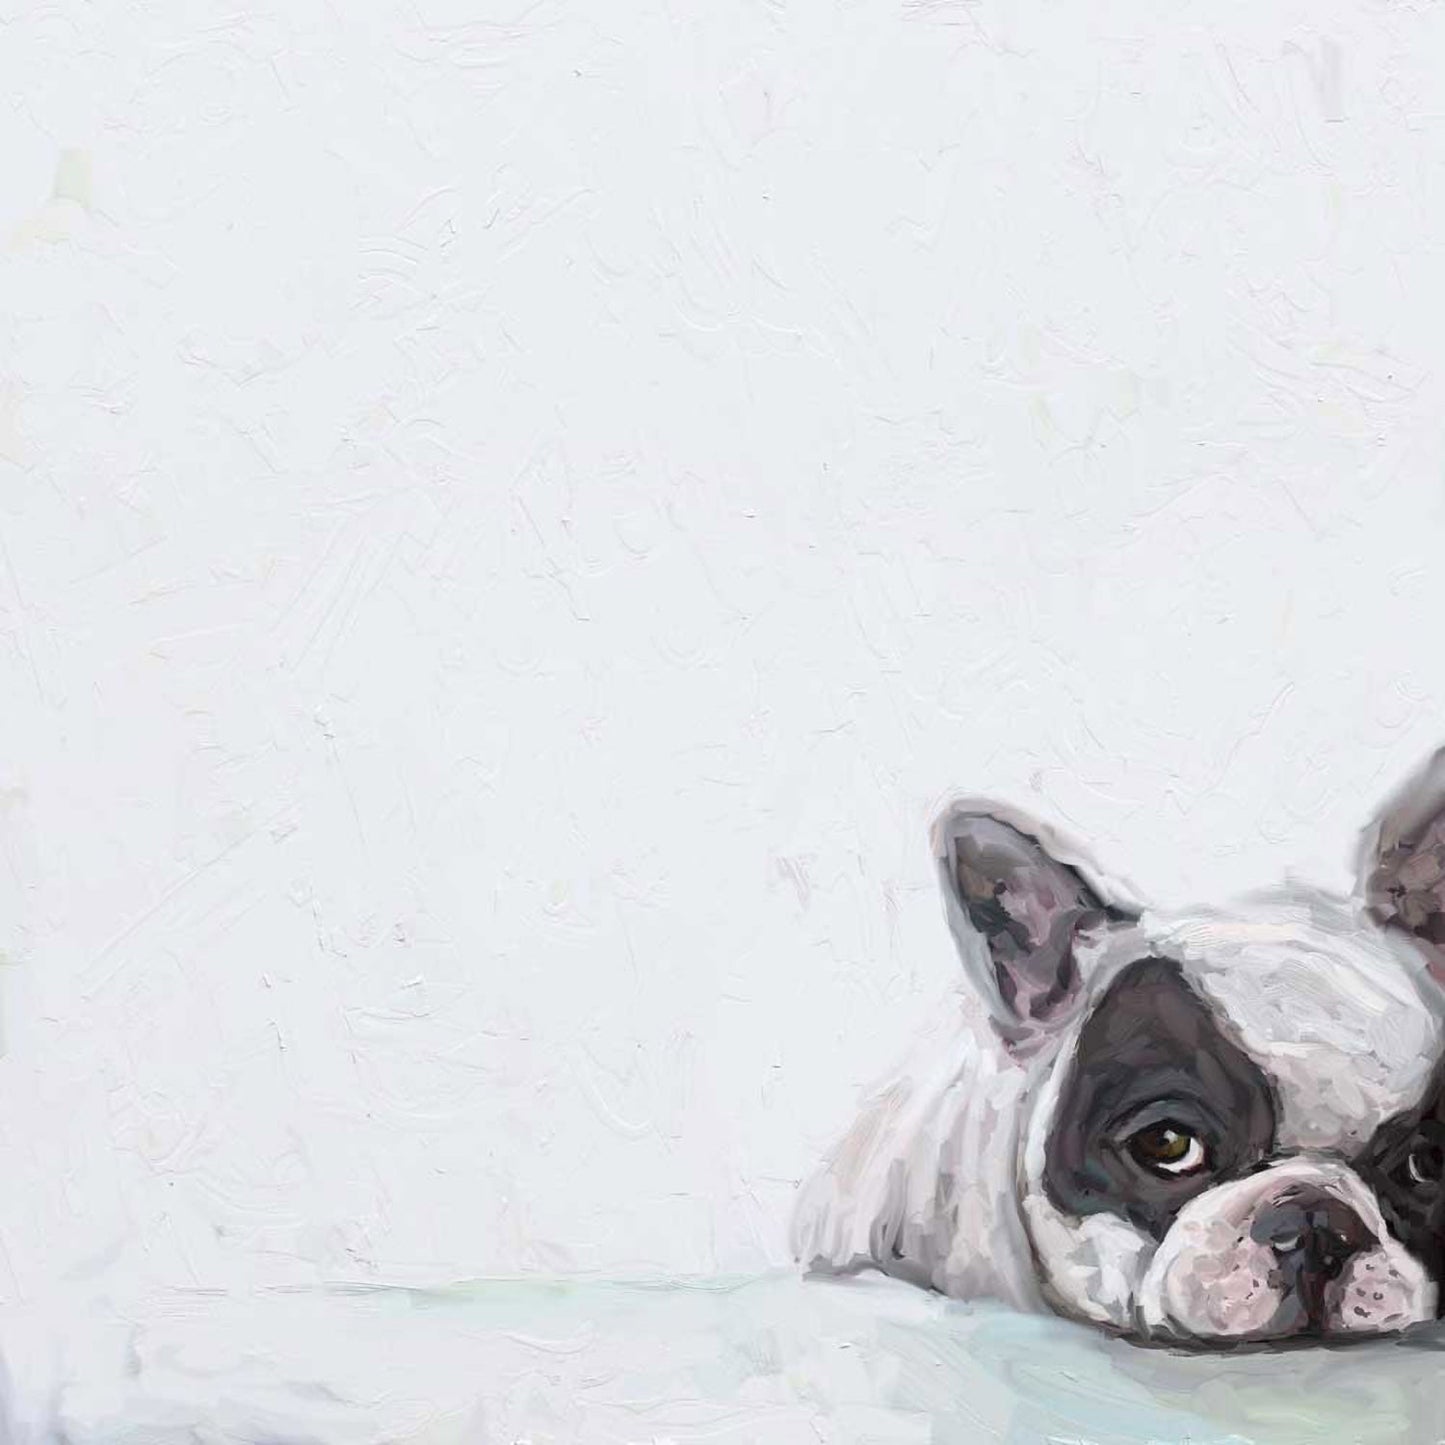 Best Friend - Nap Time Isn't Over Canvas Wall Art